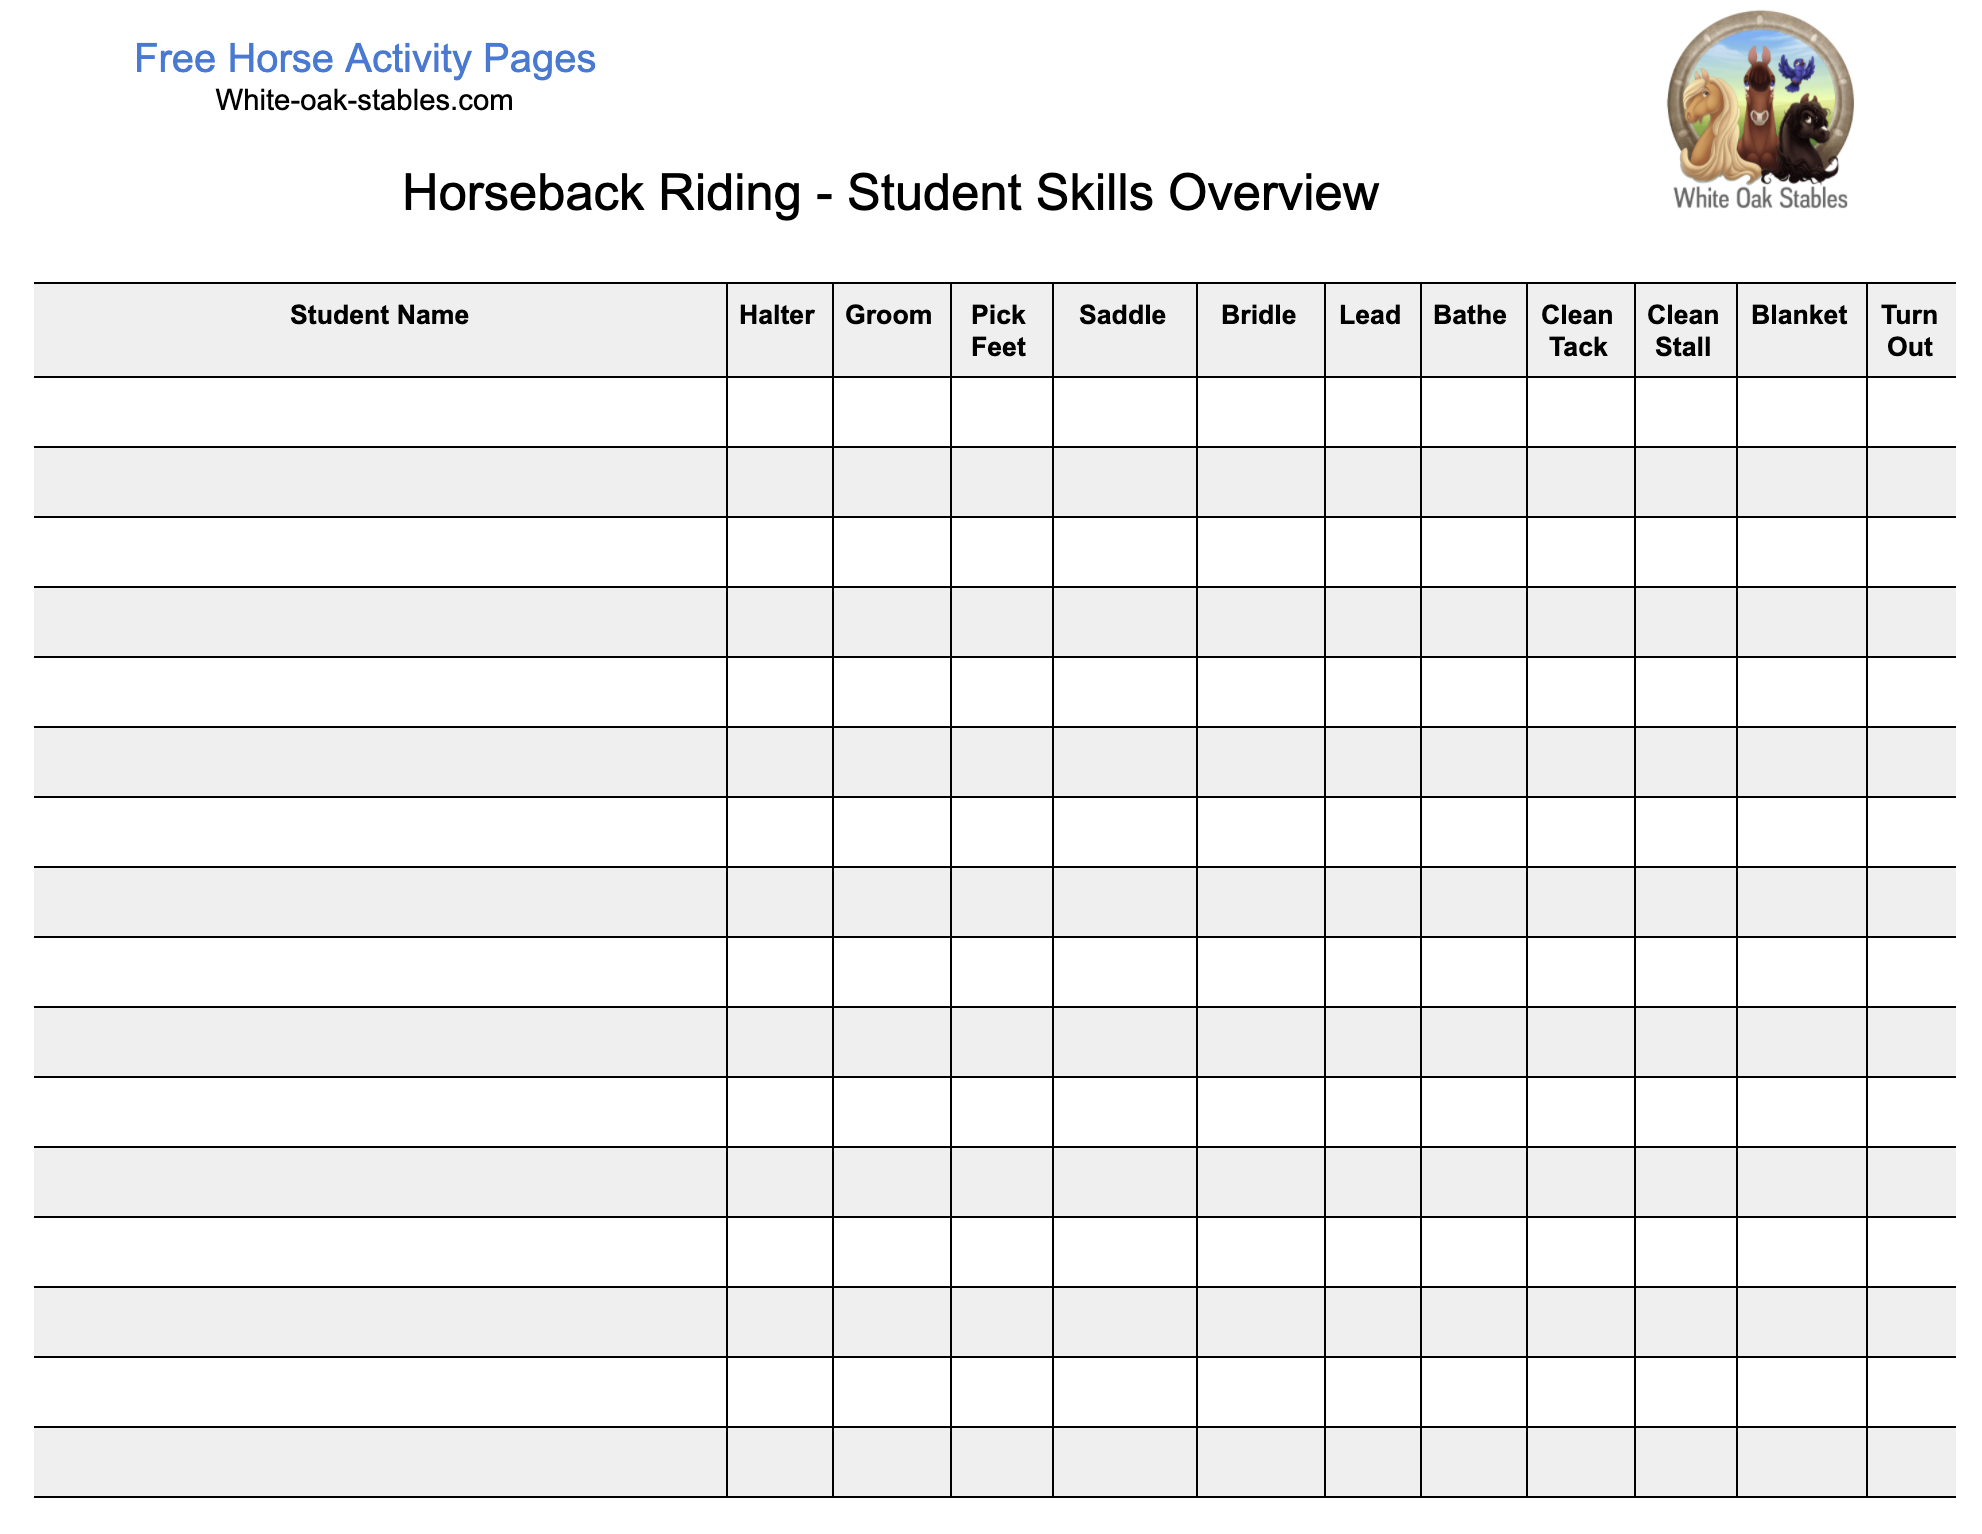 Student Horseback Riding Lesson Program Overview Record